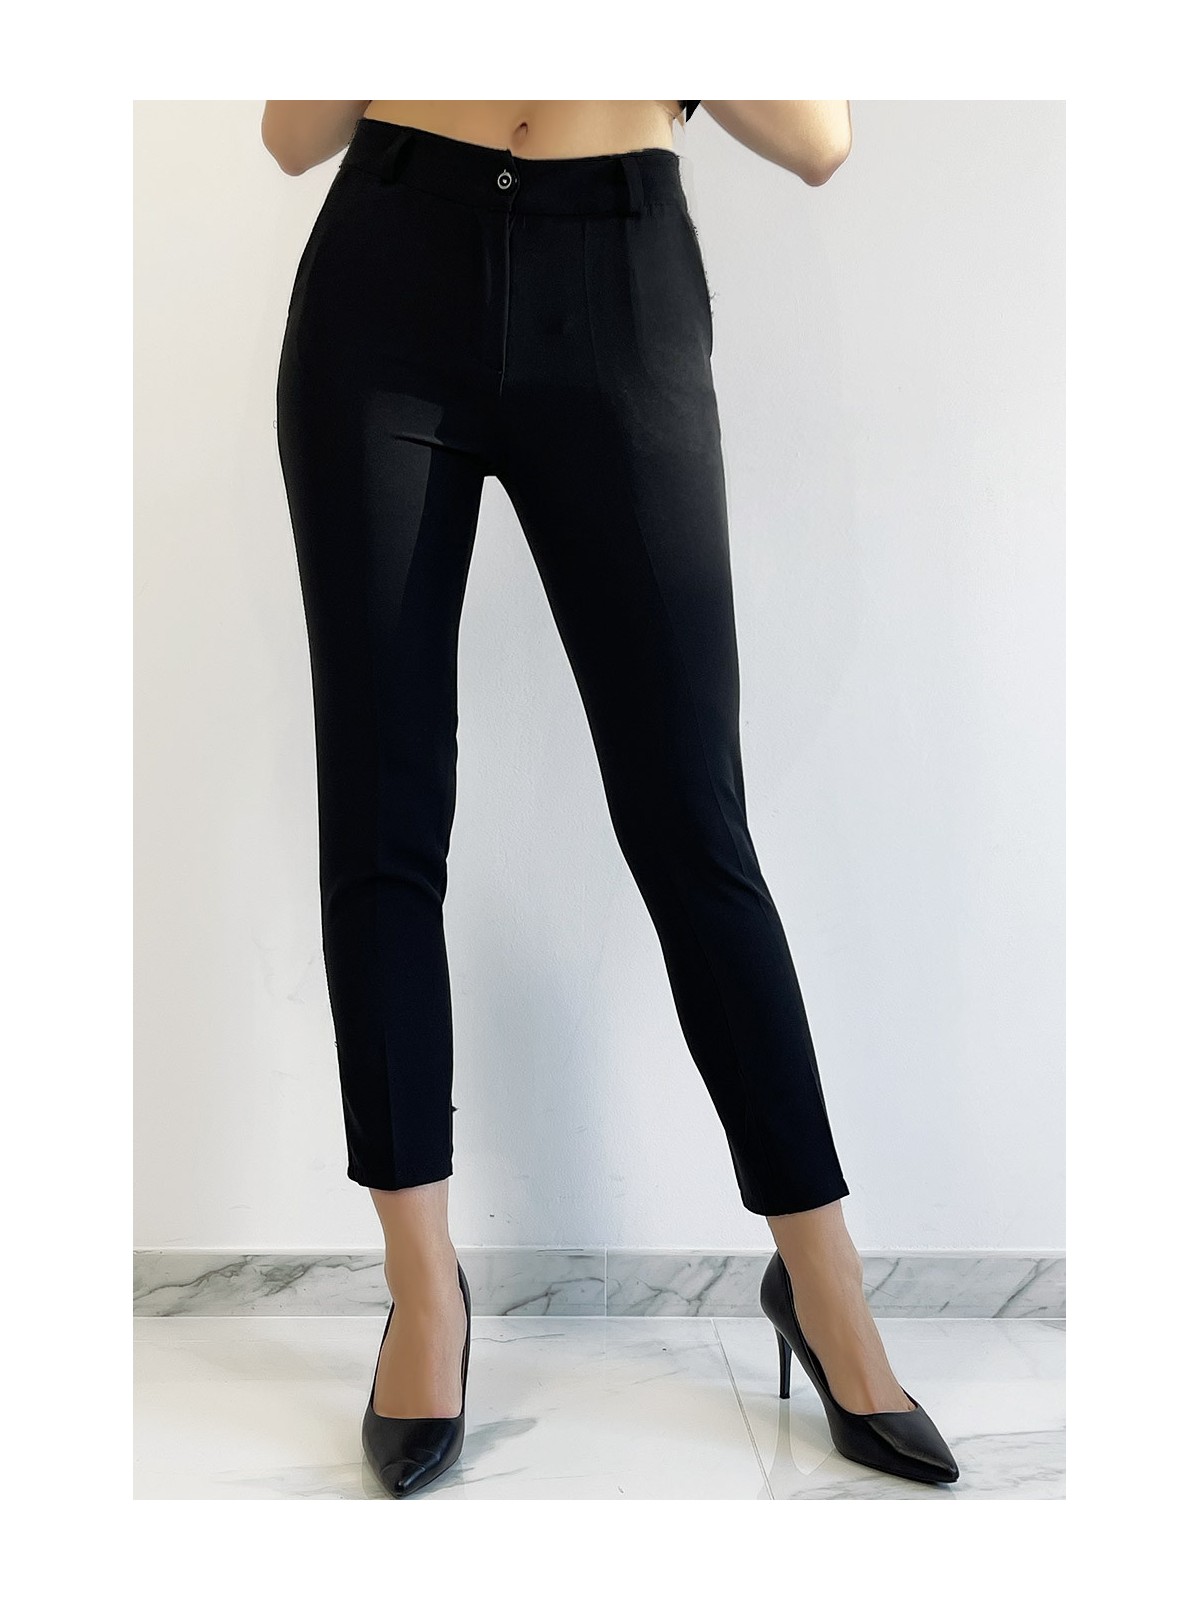 Pantalon slim noir avec poches style working girl - 7